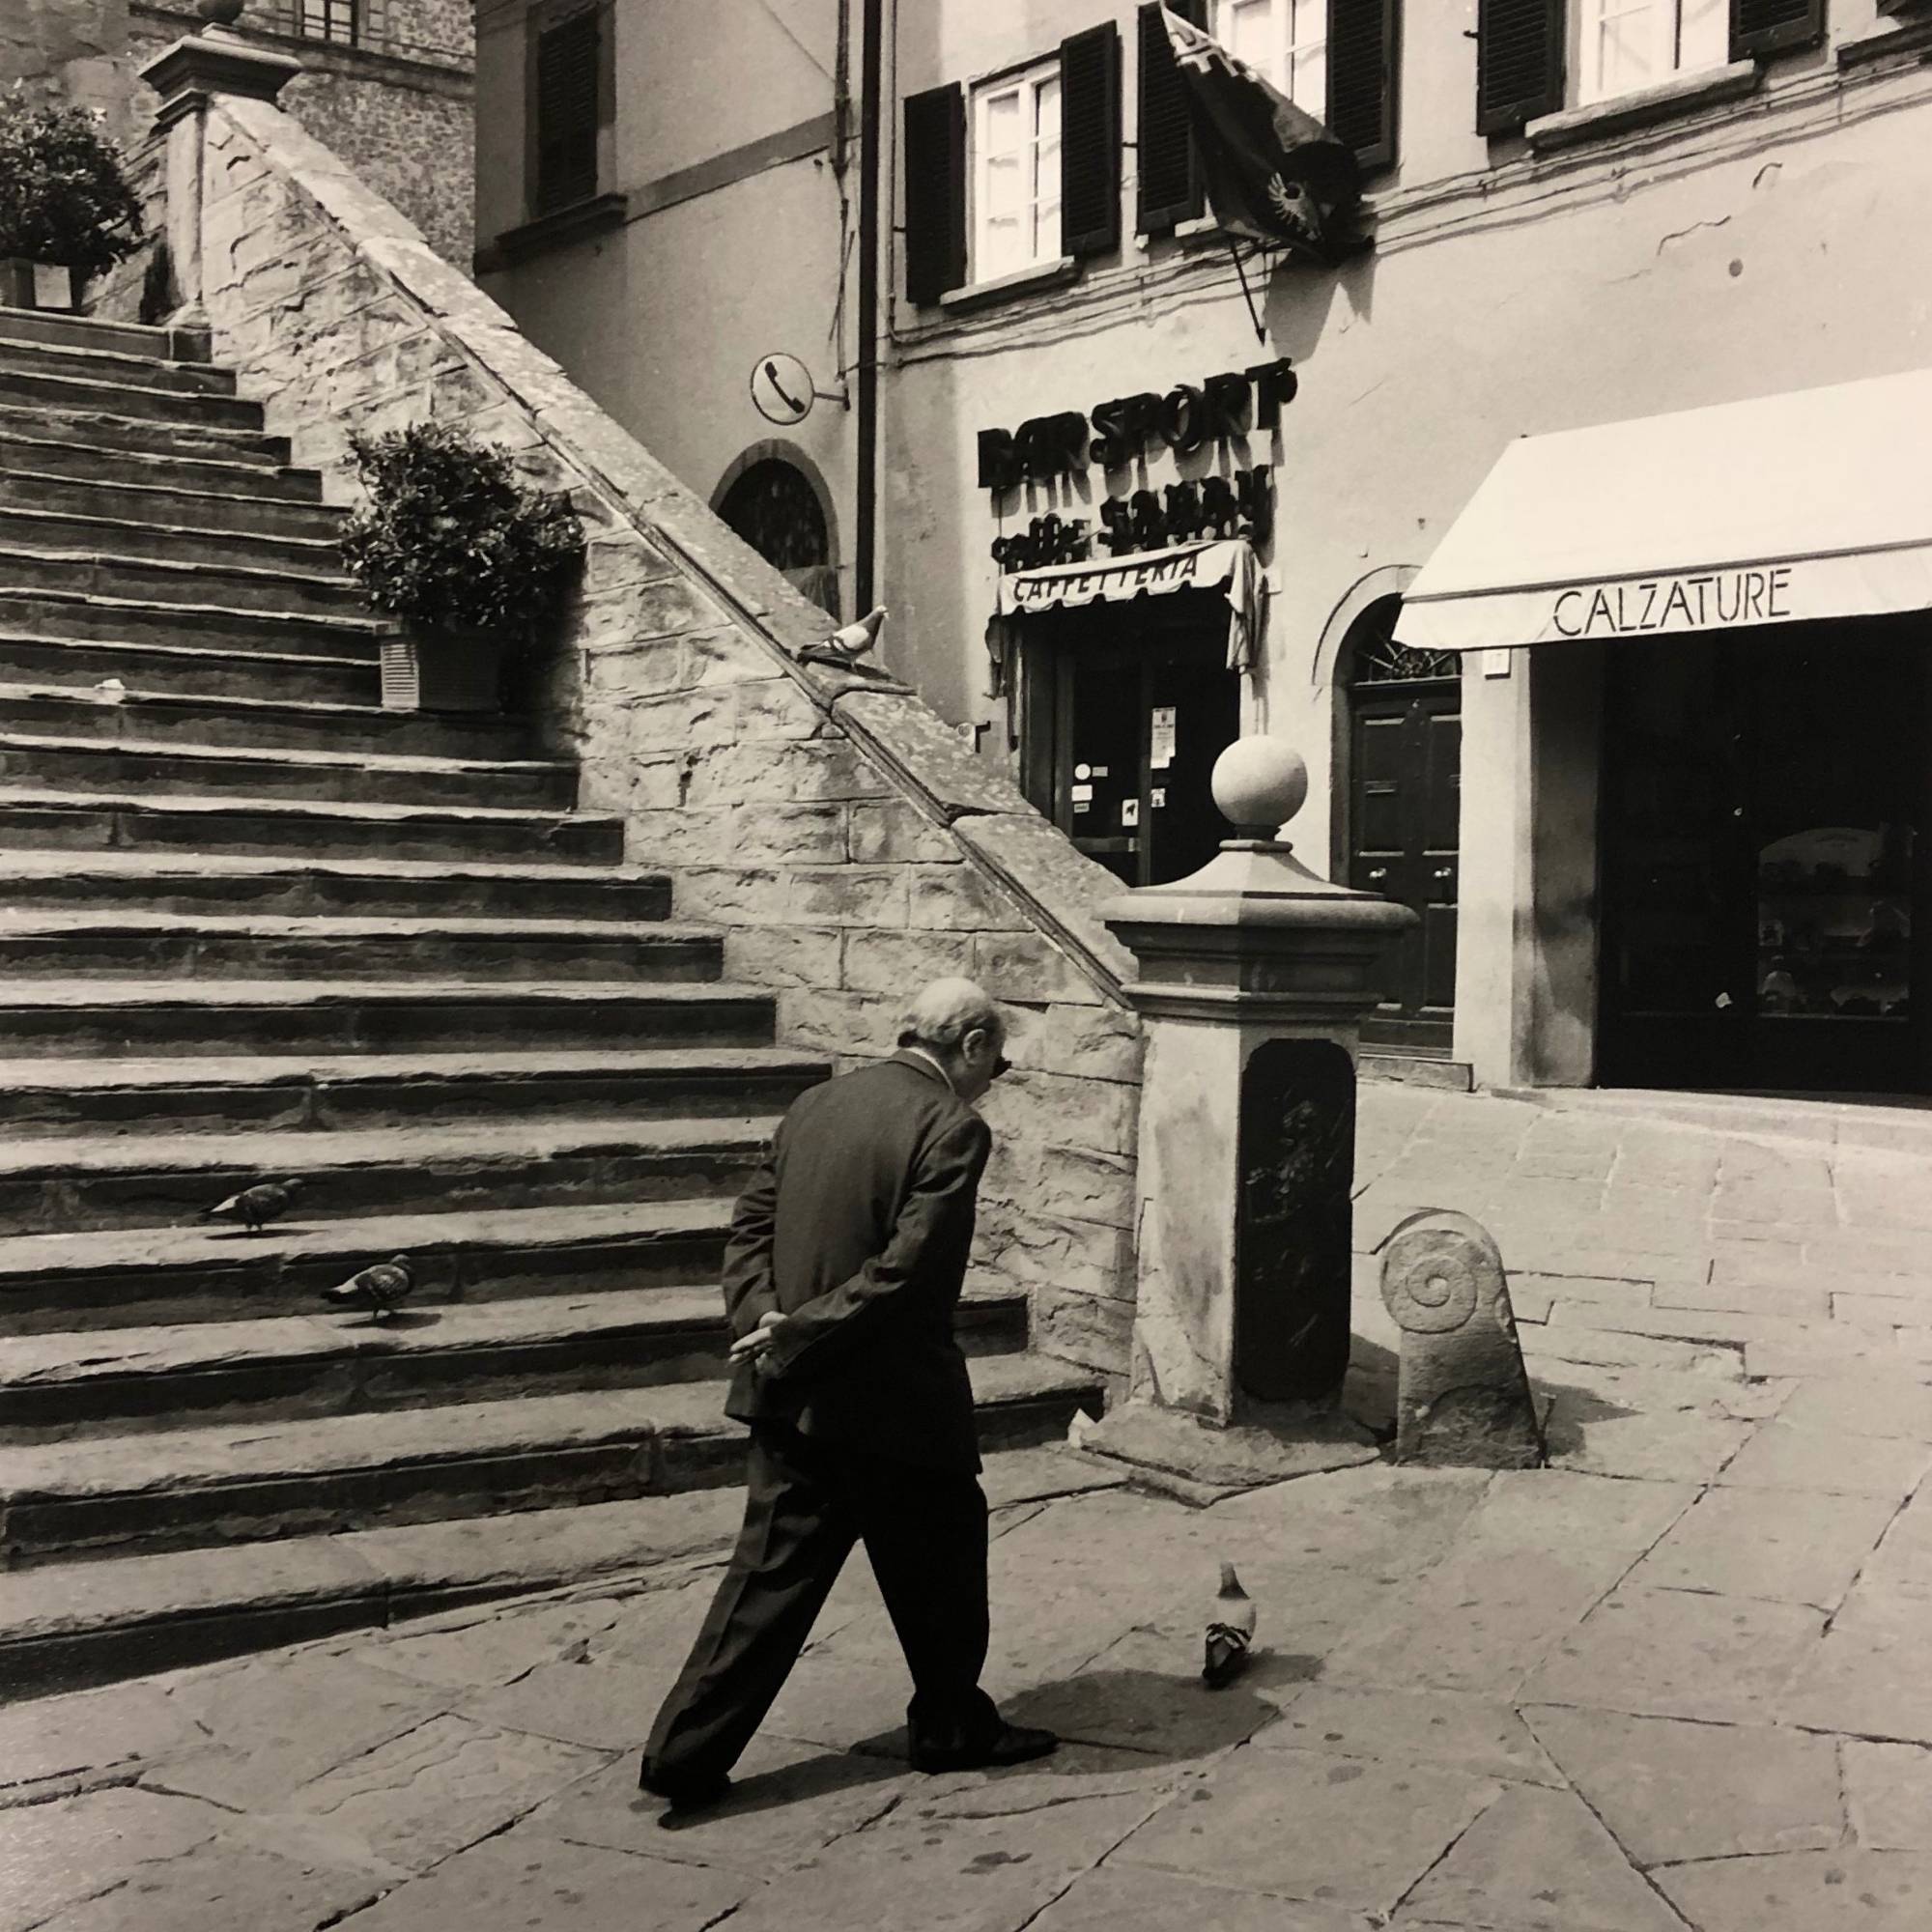 man walking on cobblestone street next to stone stairway with pigeon on ground next to him